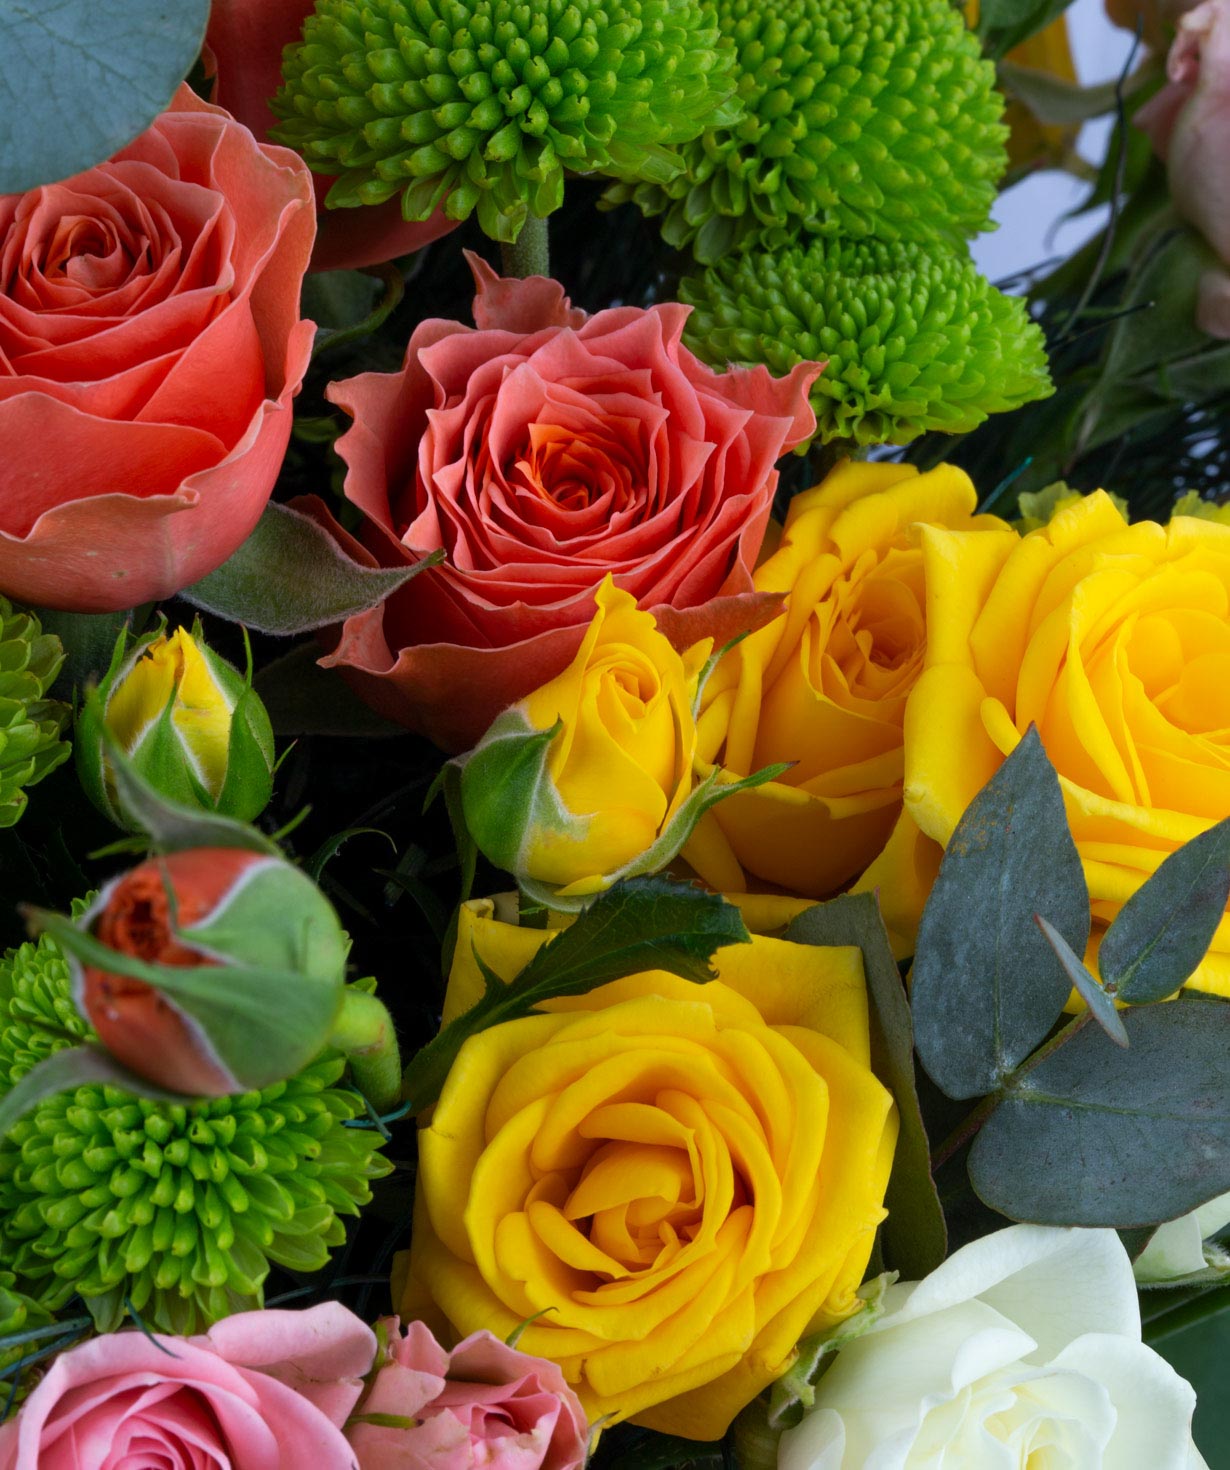 Bouquet `Ensenada` with roses